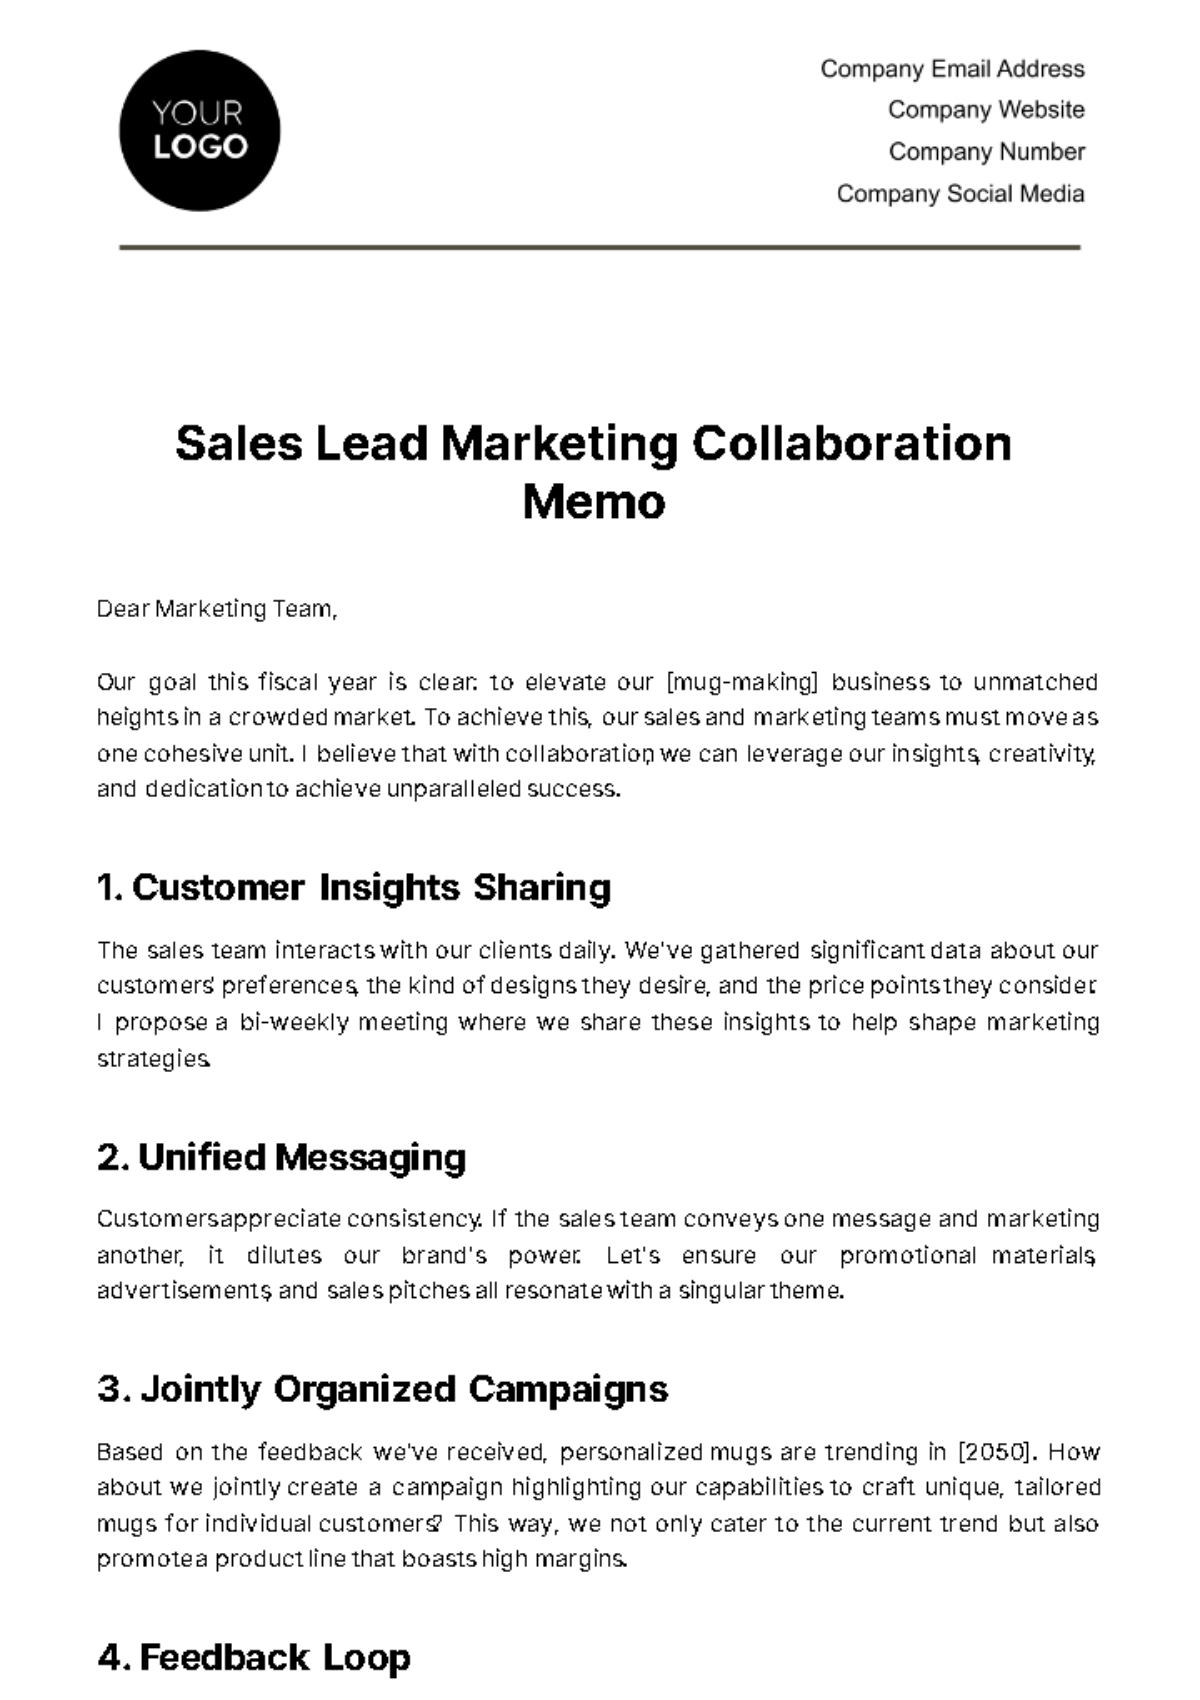 Free Sales Lead Marketing Collaboration Memo Template